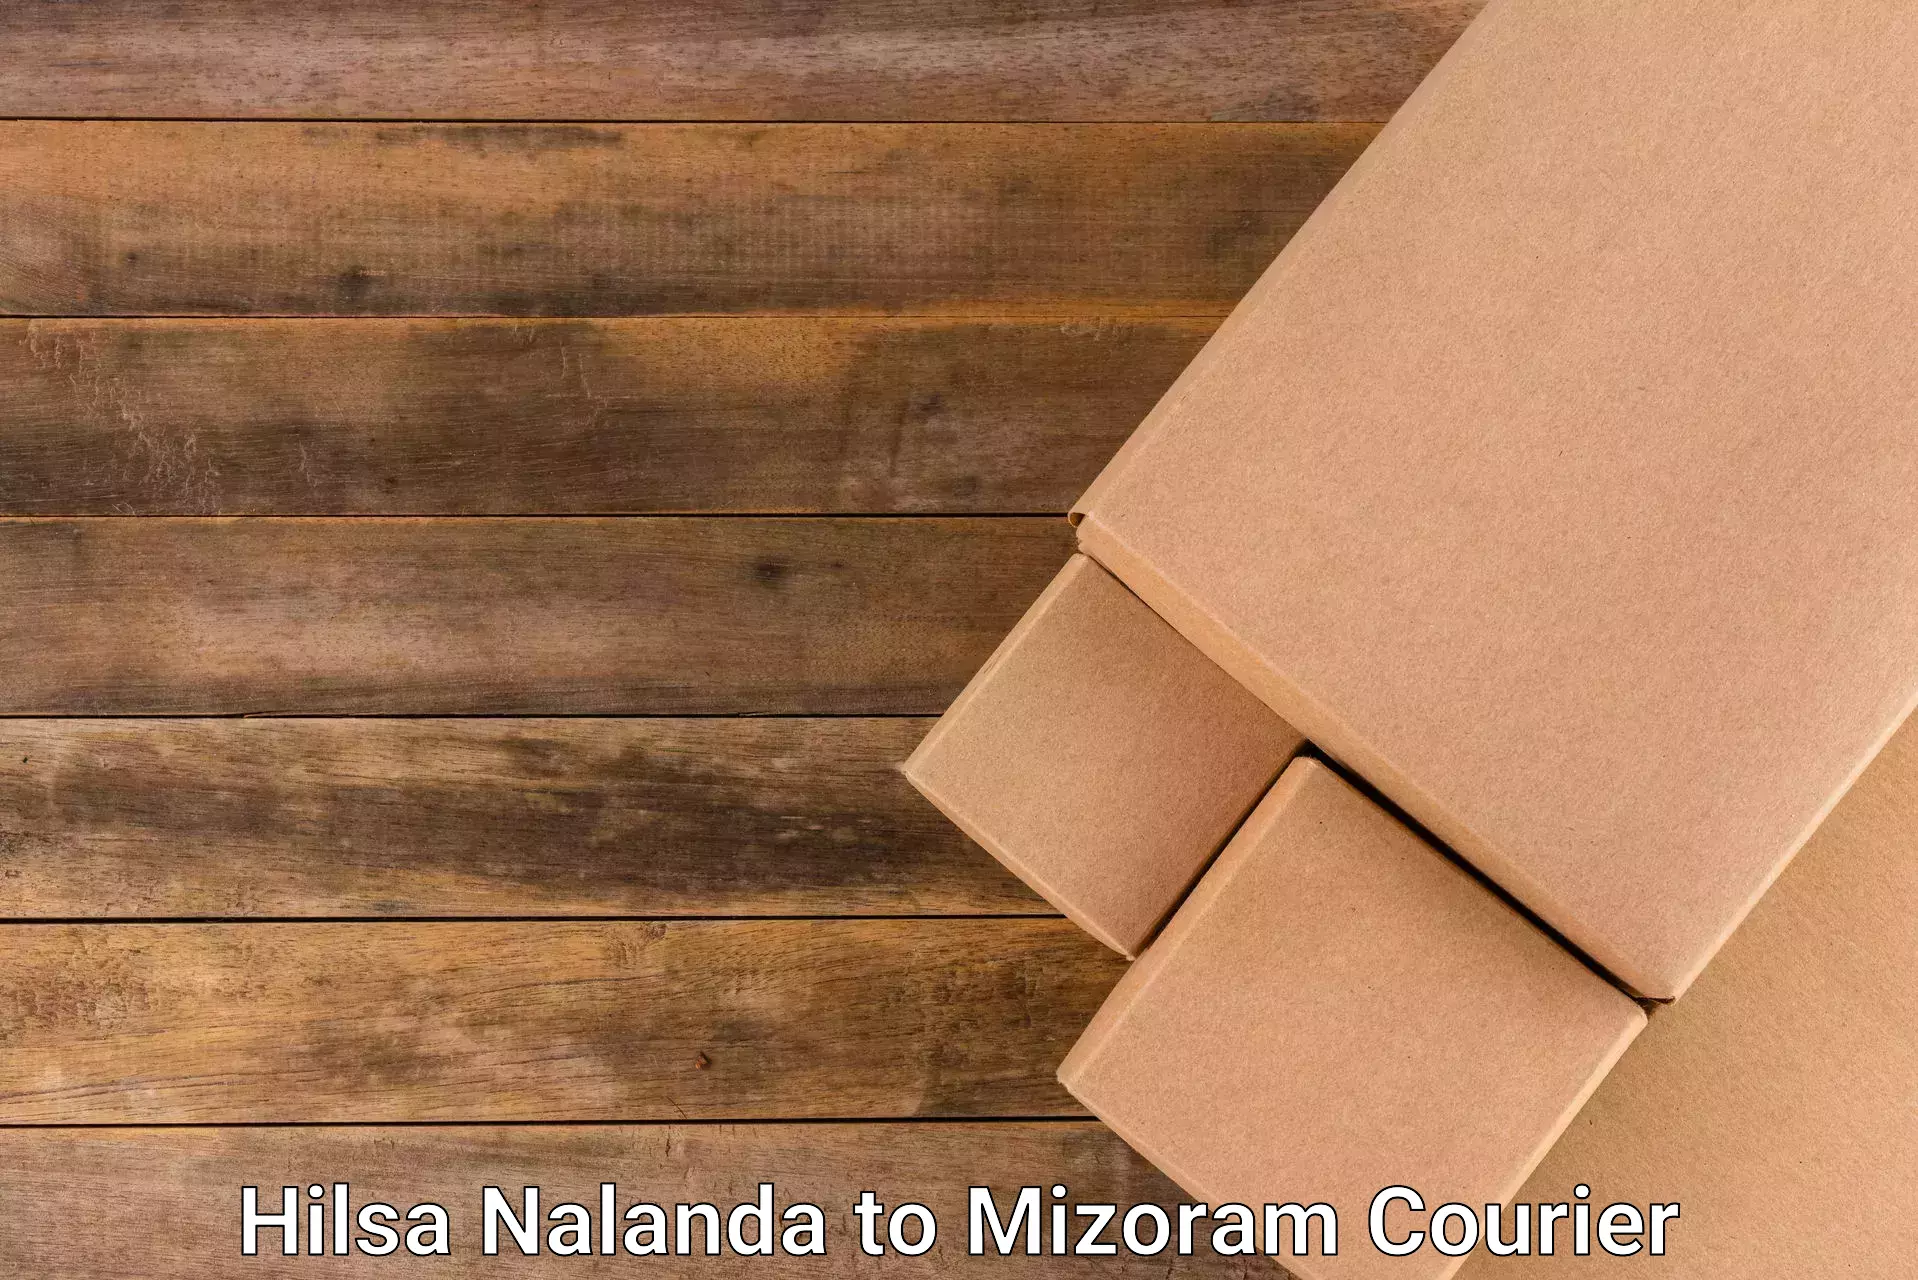 Professional courier handling Hilsa Nalanda to Siaha